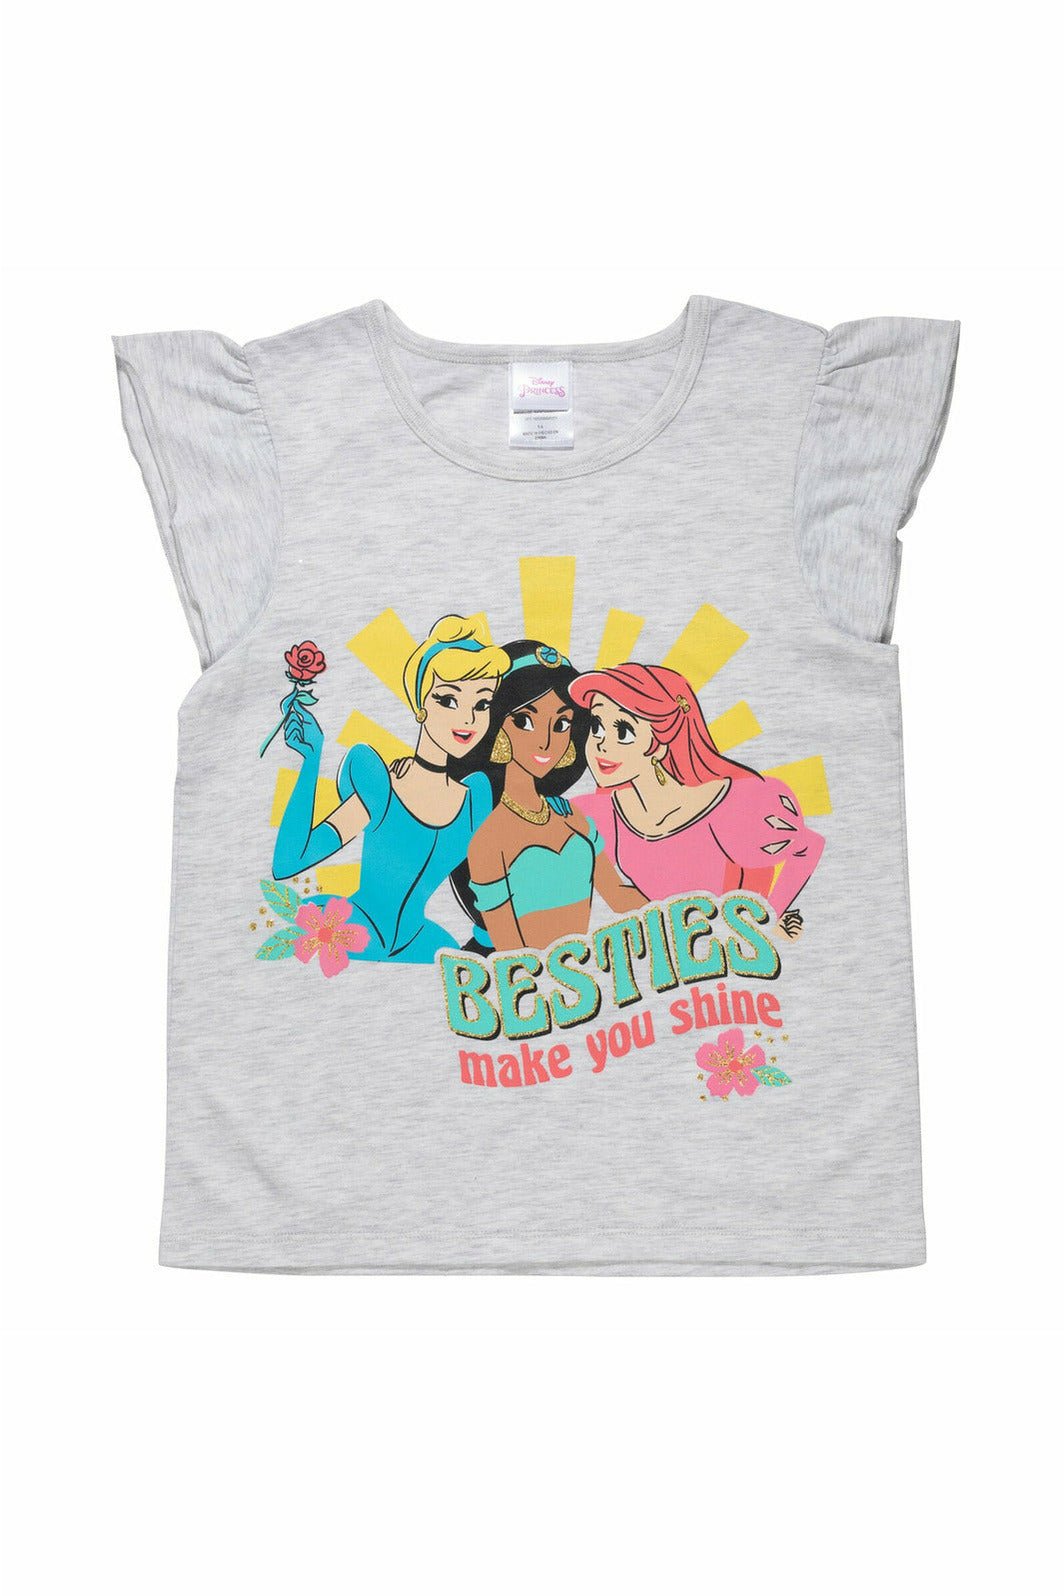 Disney Princess 3 Pack Graphic T-Shirts - imagikids